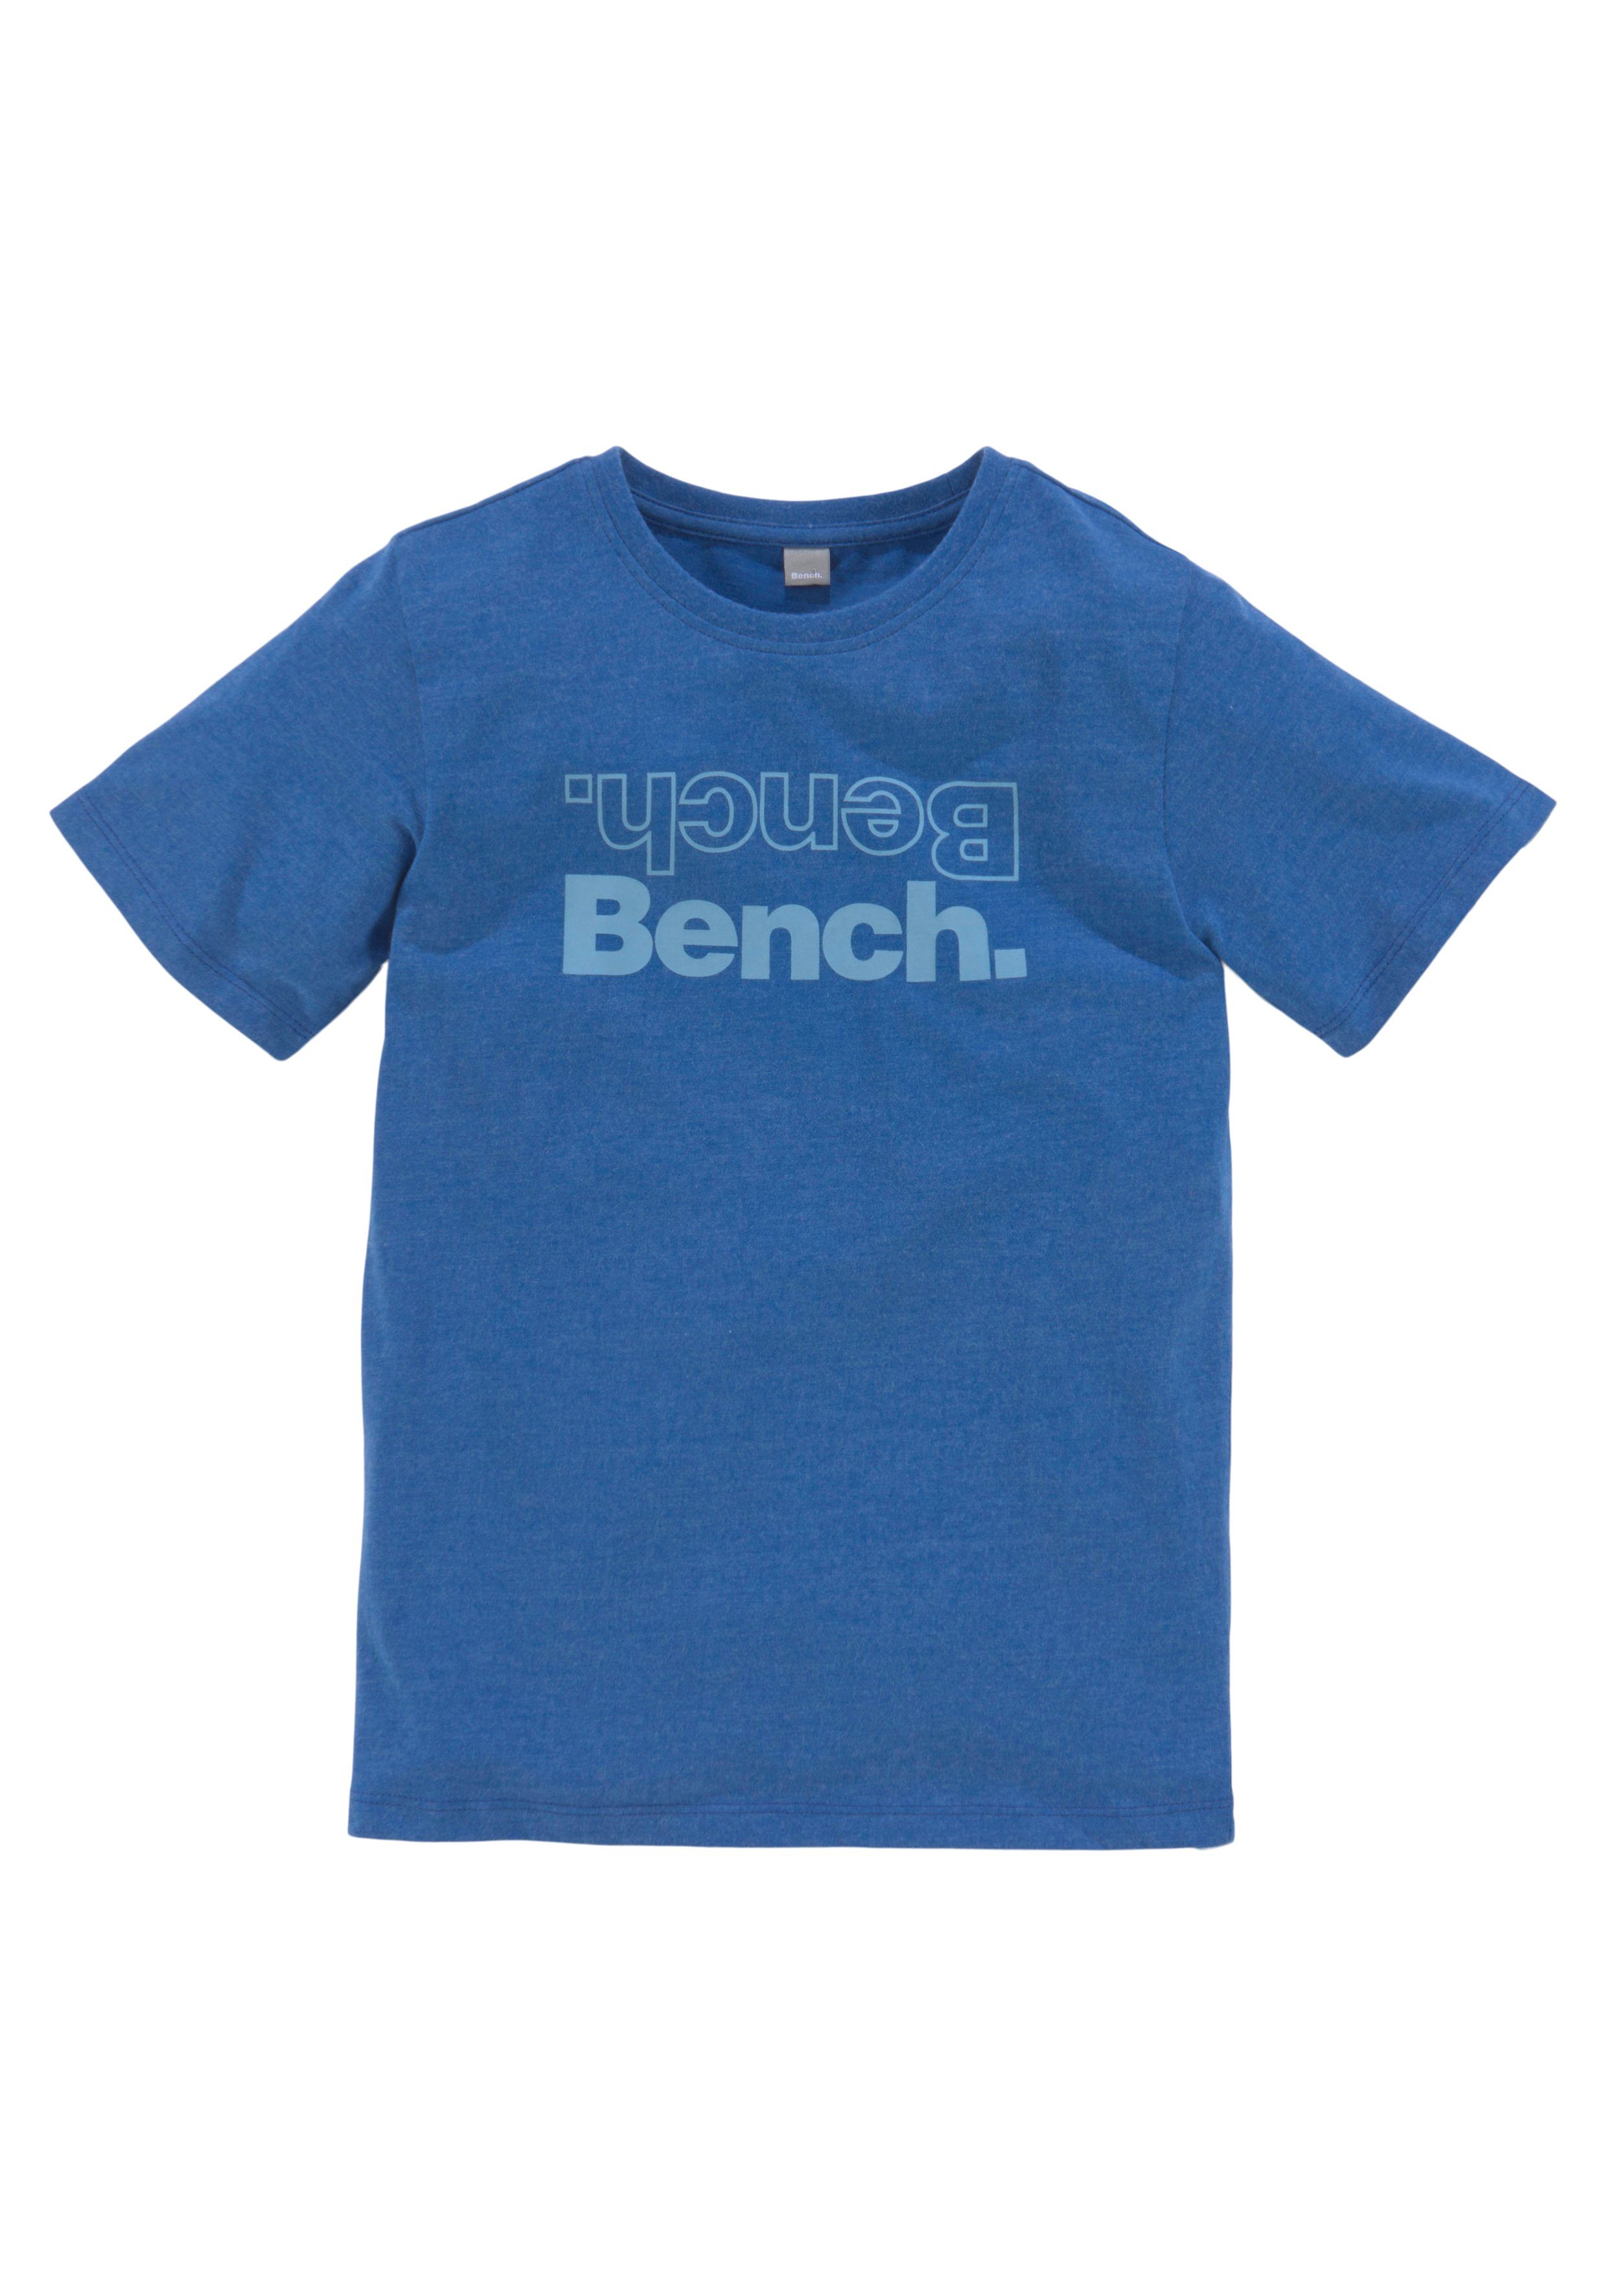 coolem Bench. T-Shirt mit Brustdruck